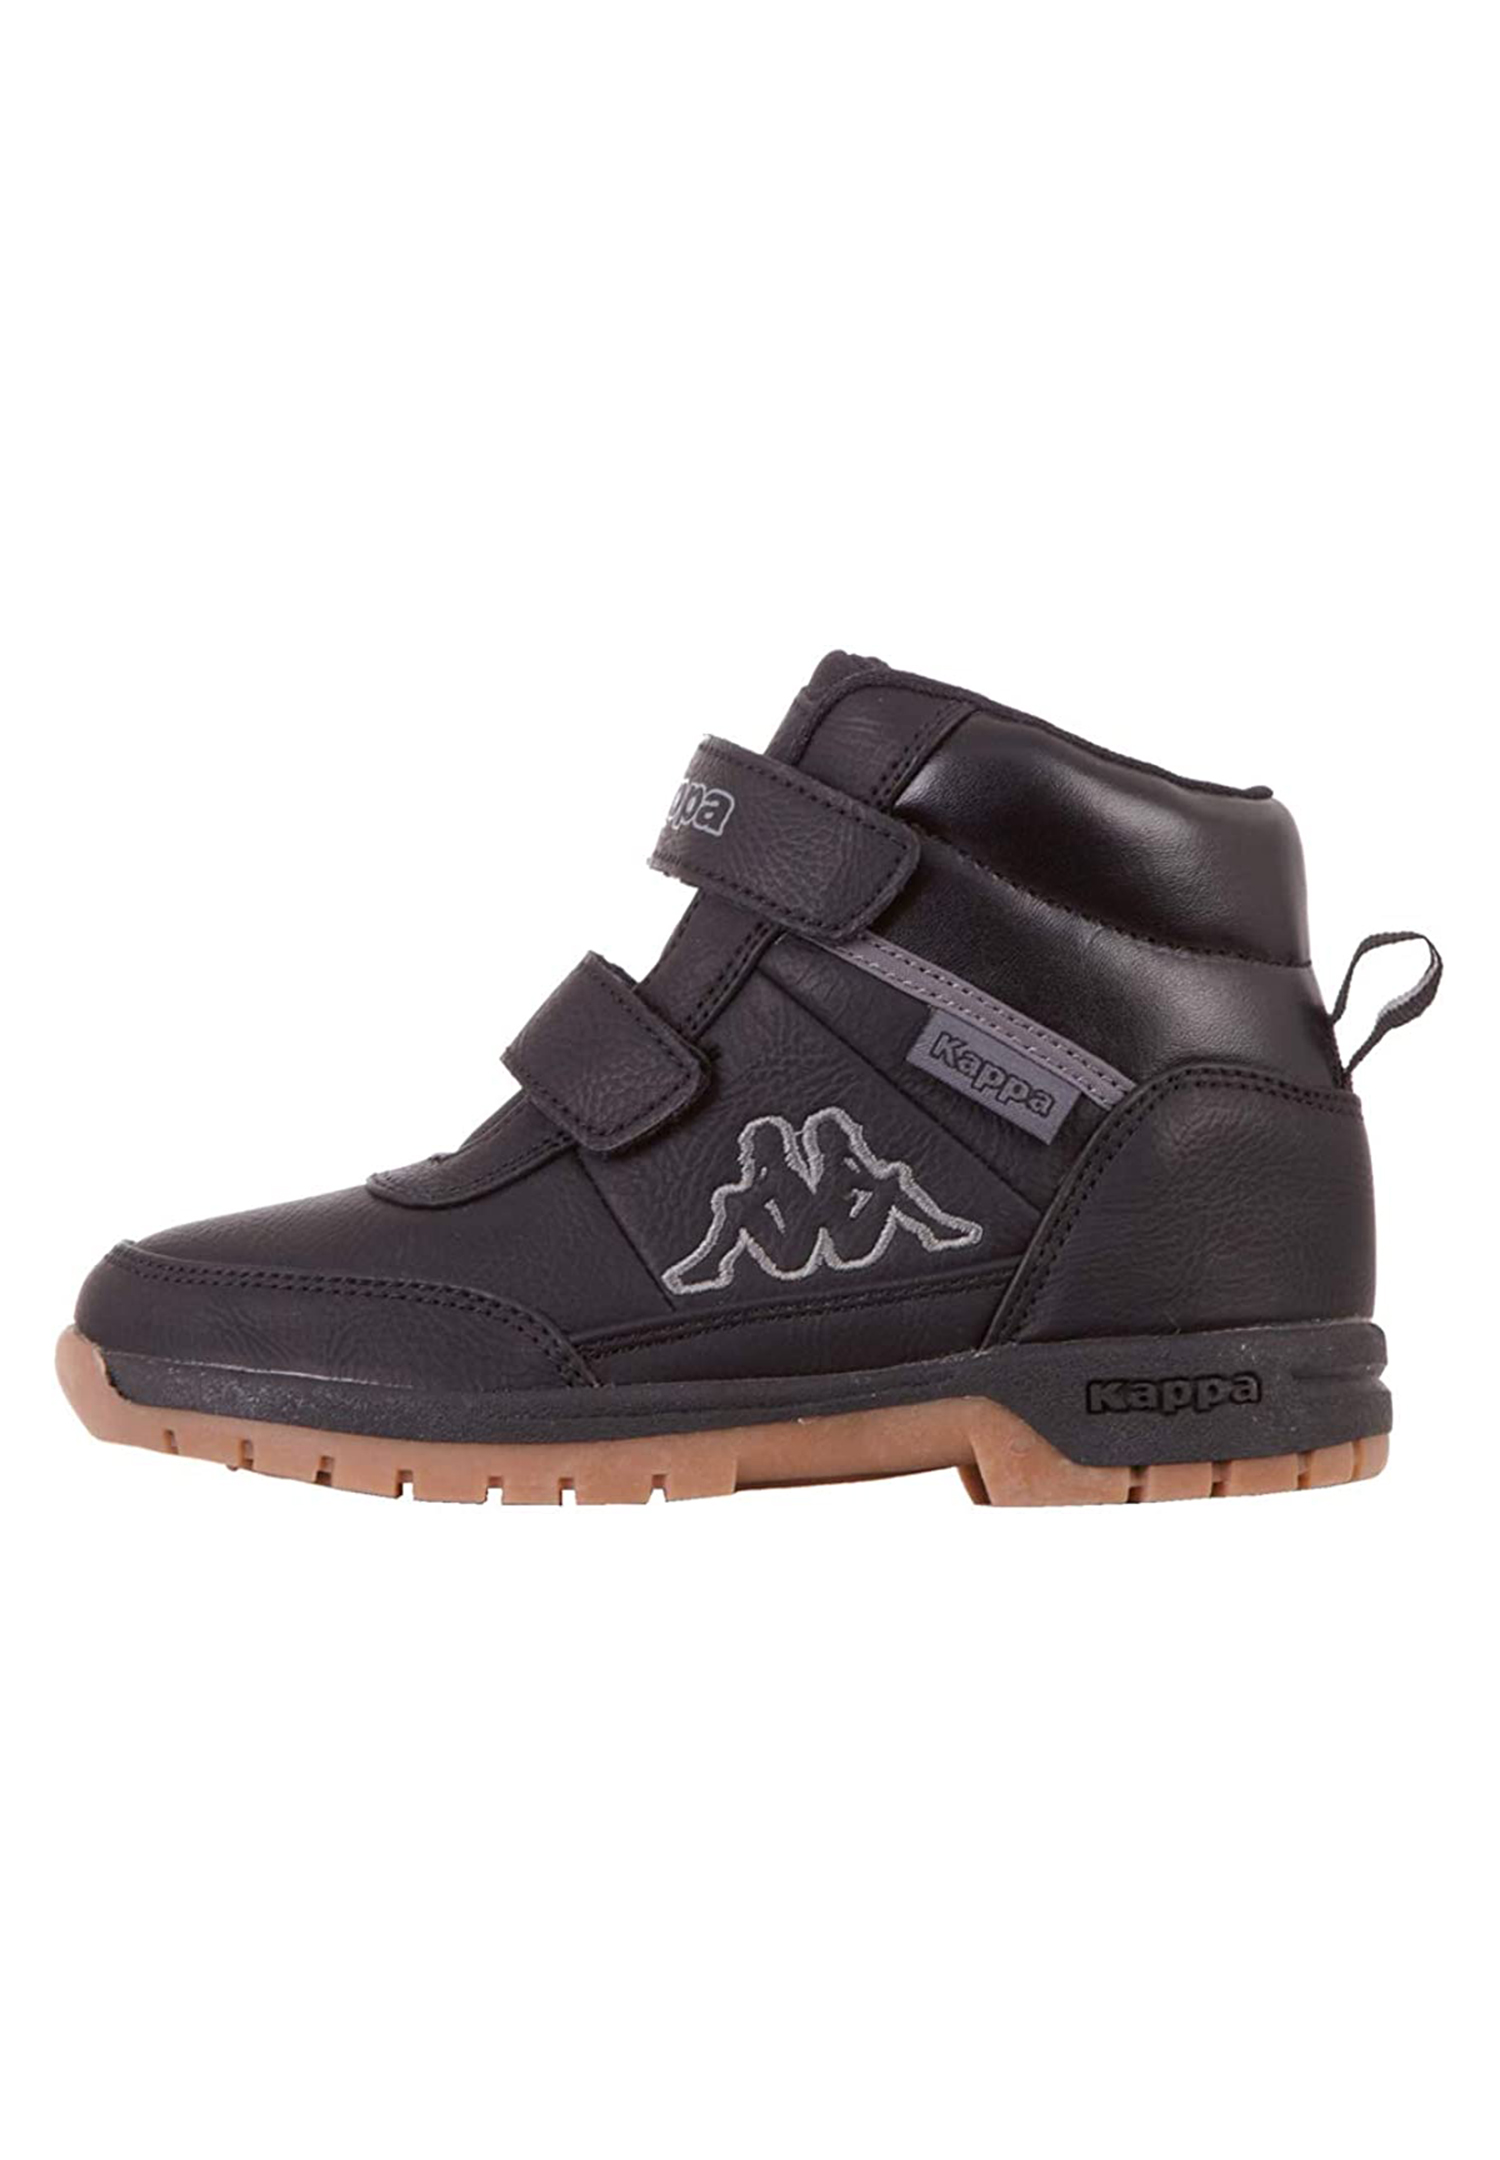 Kappa Unisex Kinder Sneaker High Top Stylecode 260239K 1111 schwarz